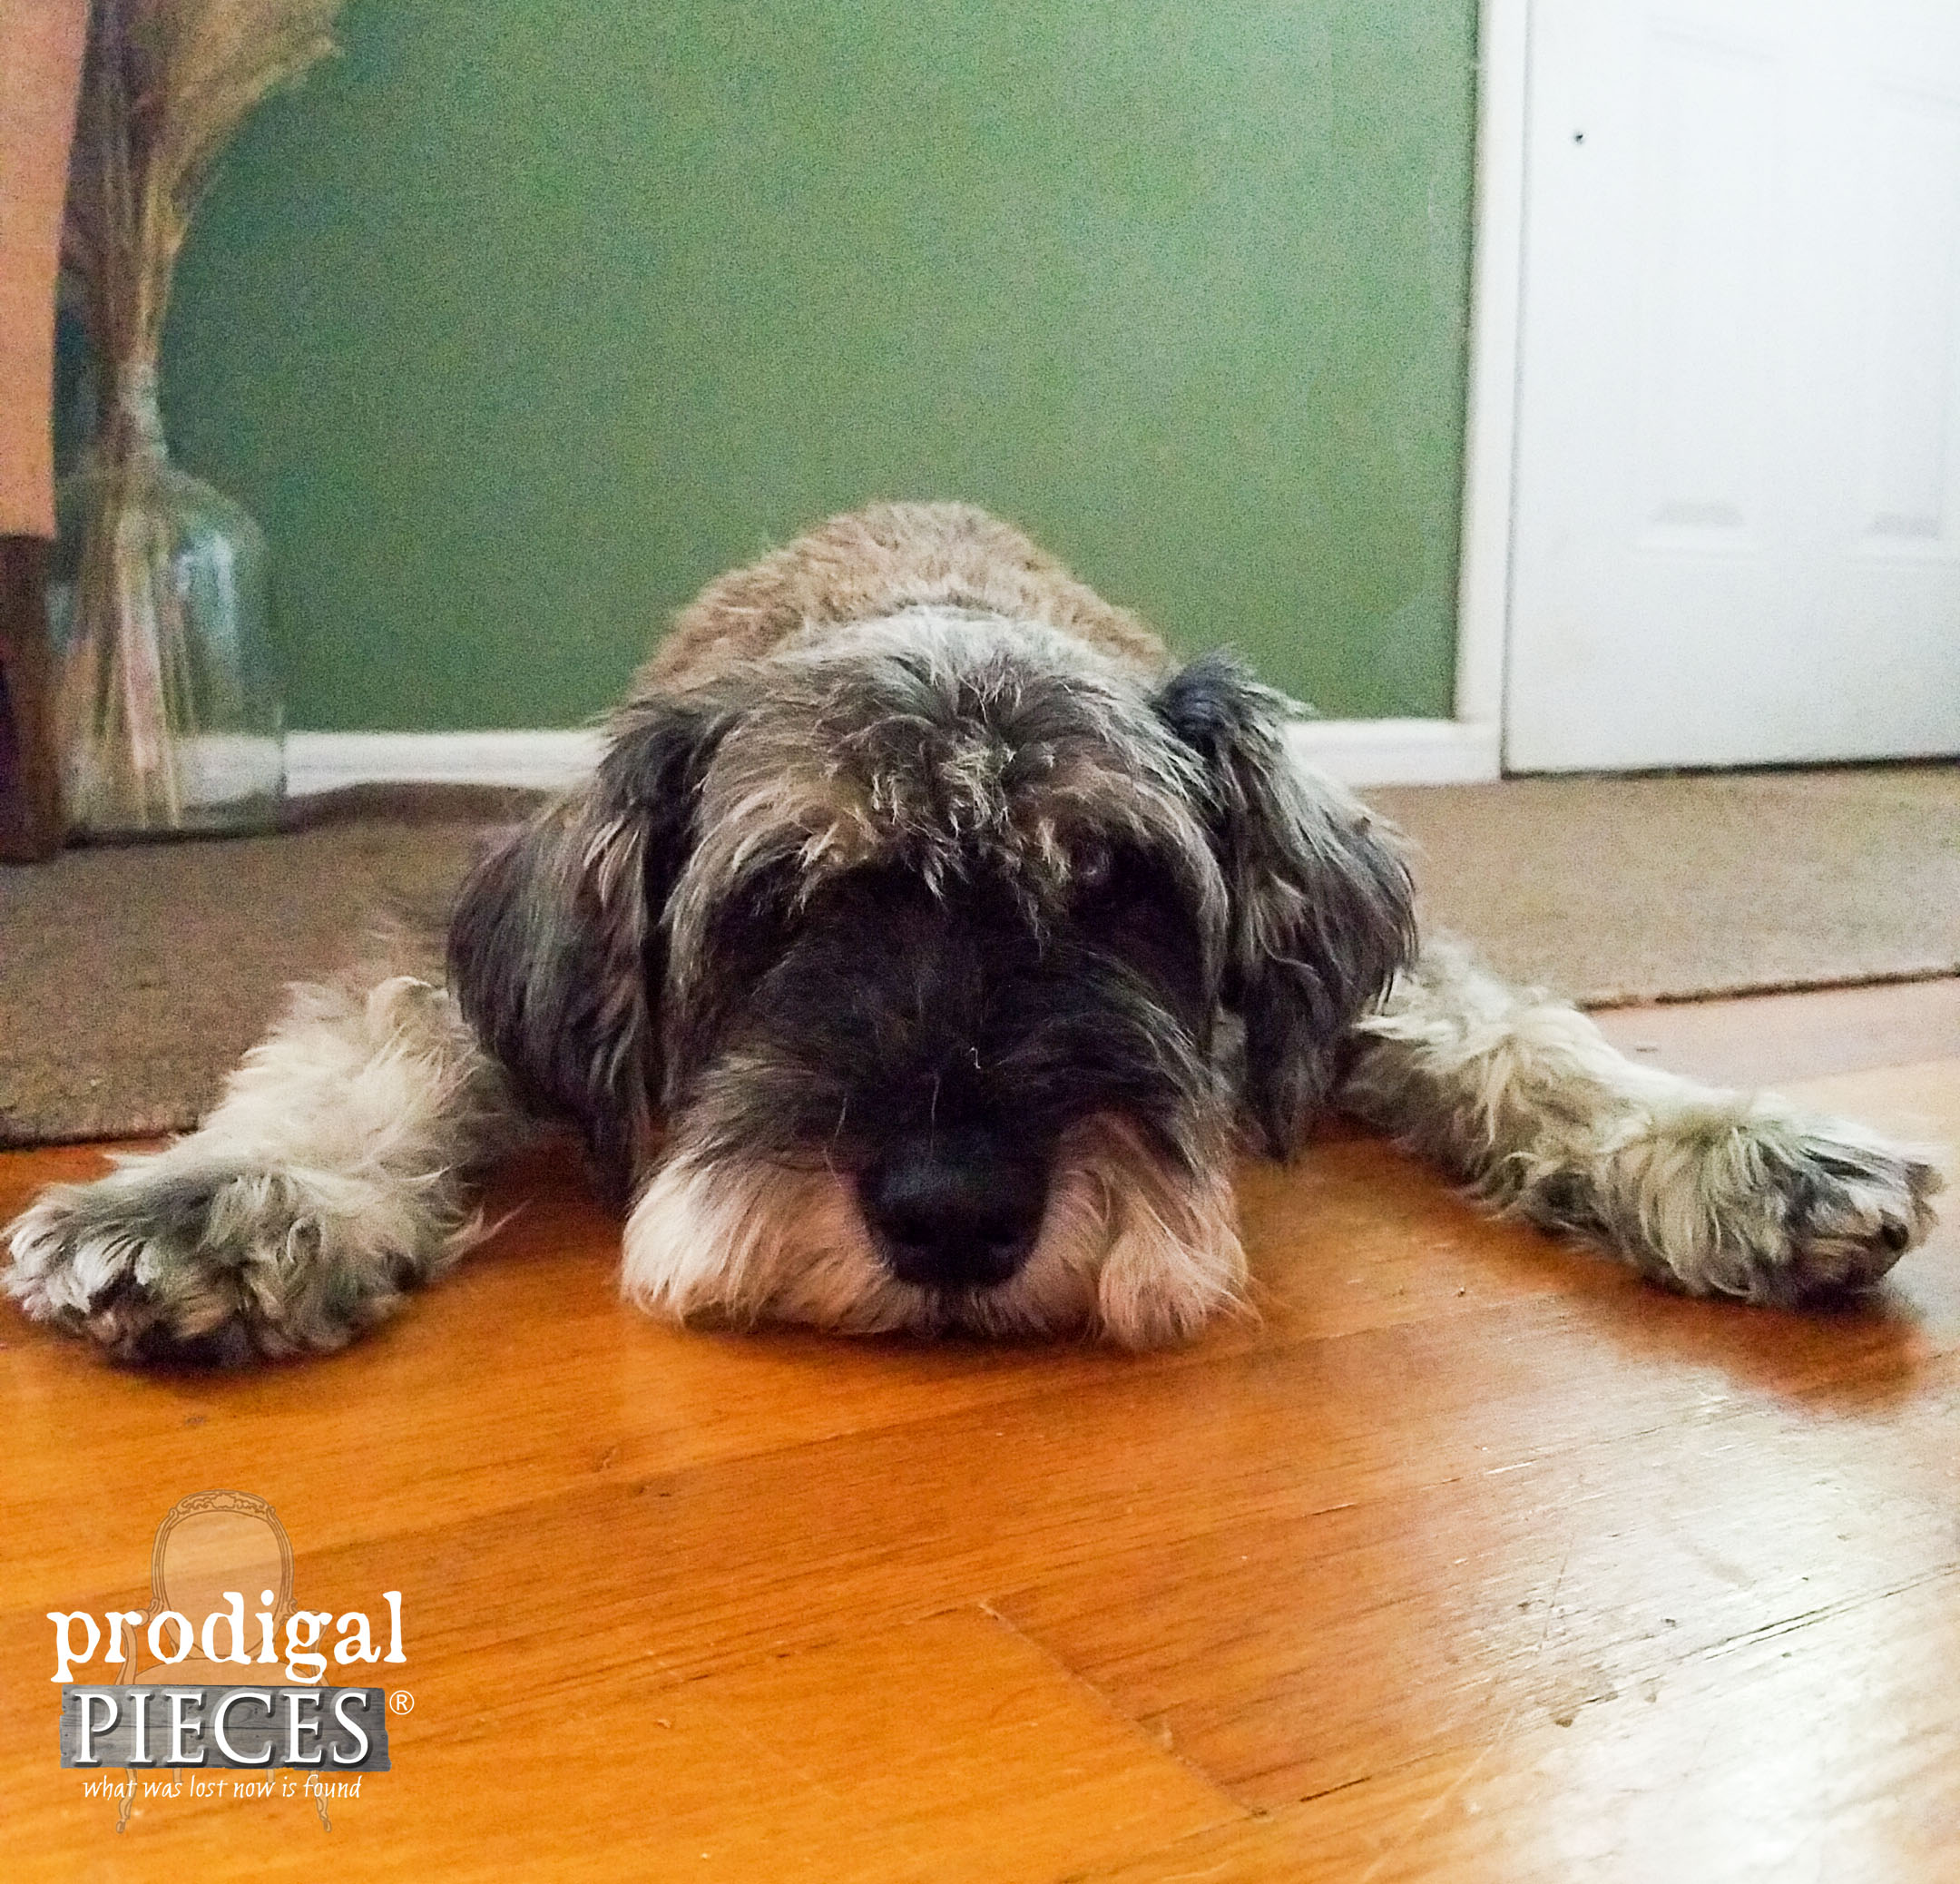 Miniture Schnauzer Dog Laying on Floor | Prodigal Pieces | www.prodigalpieces.com